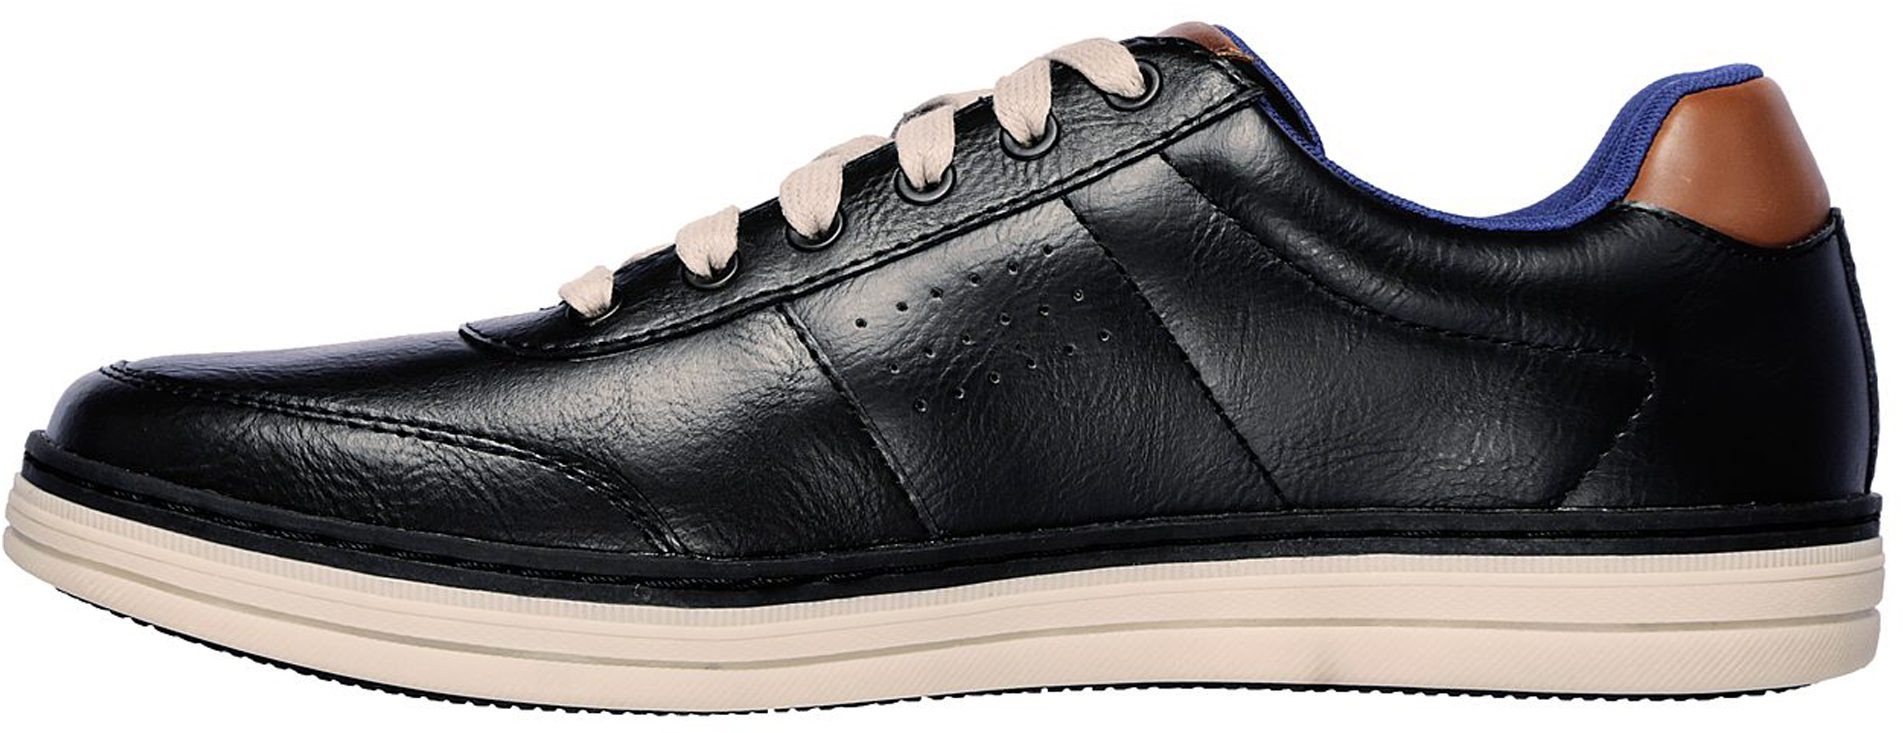 Skechers Heston - Avano Black 65876 BLK - Trainers - Humphries Shoes